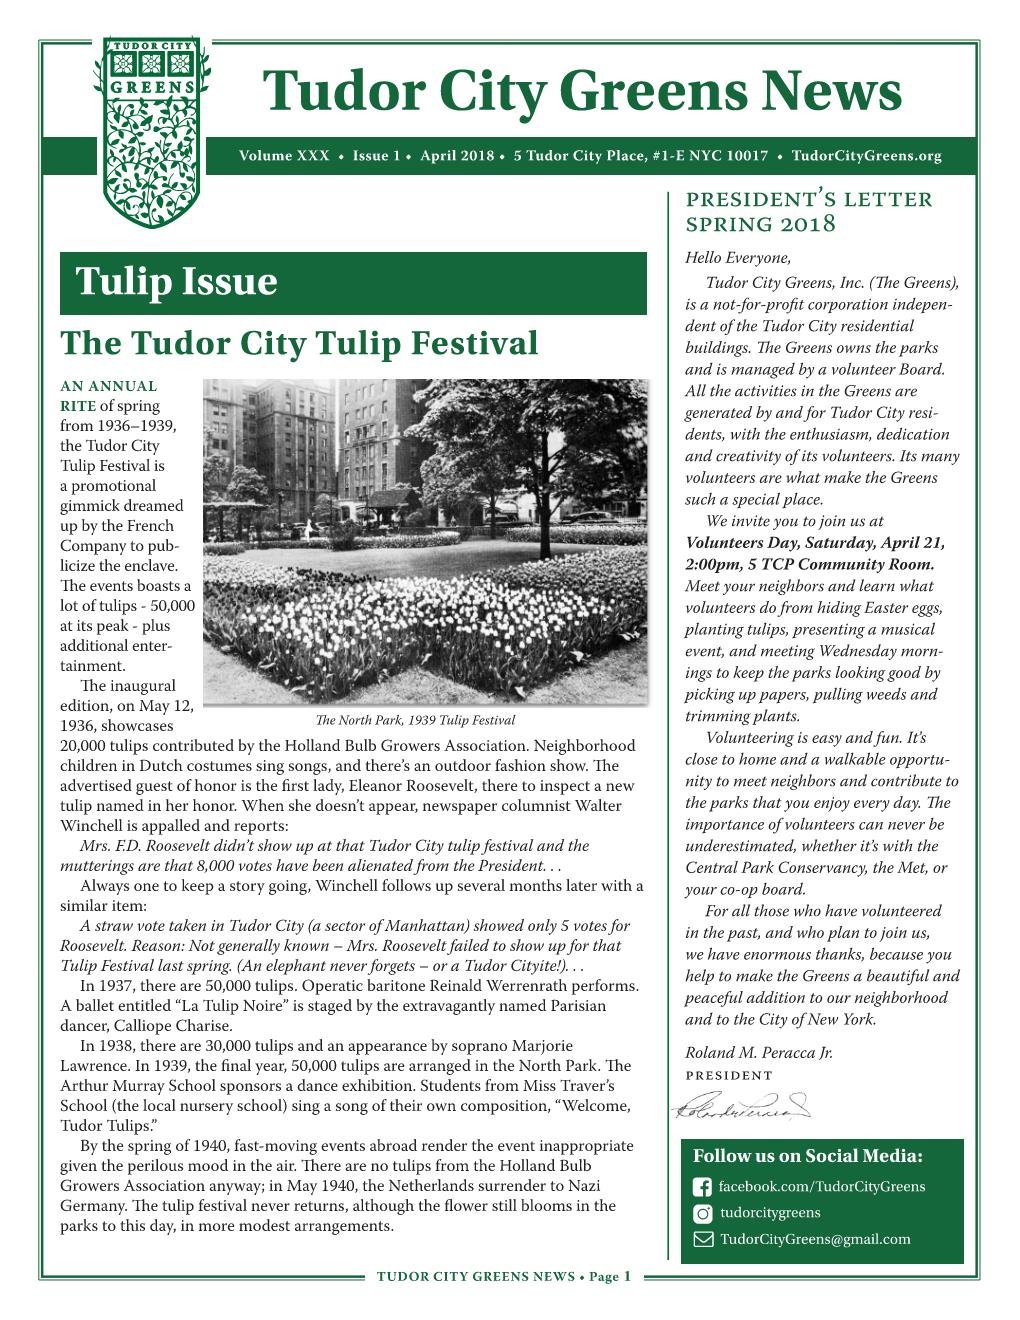 Tudor City Newsletter_Spring 2018_r4-2 Page 001.jpg